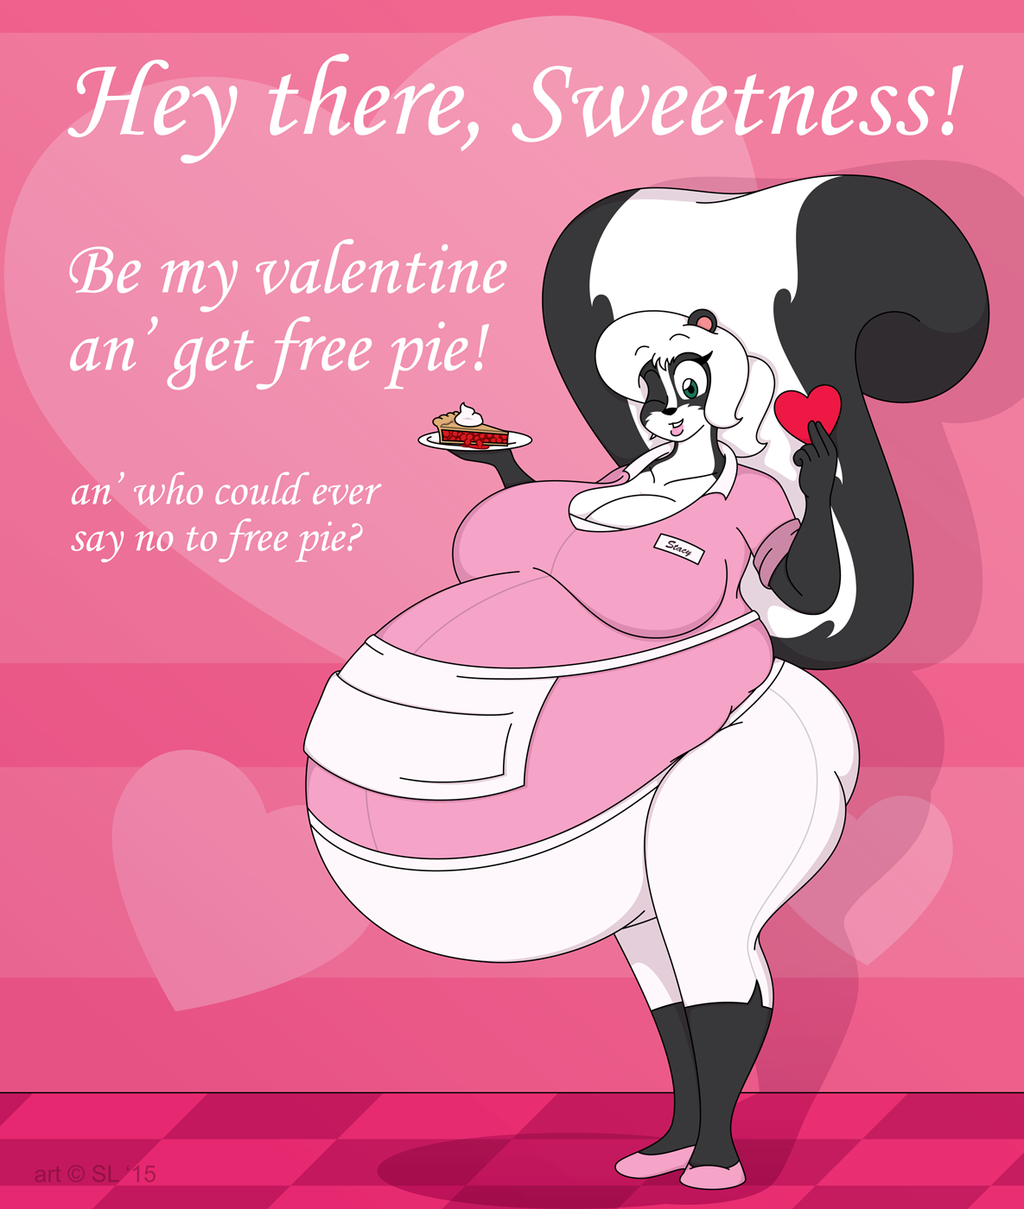 Stacy's Valentine